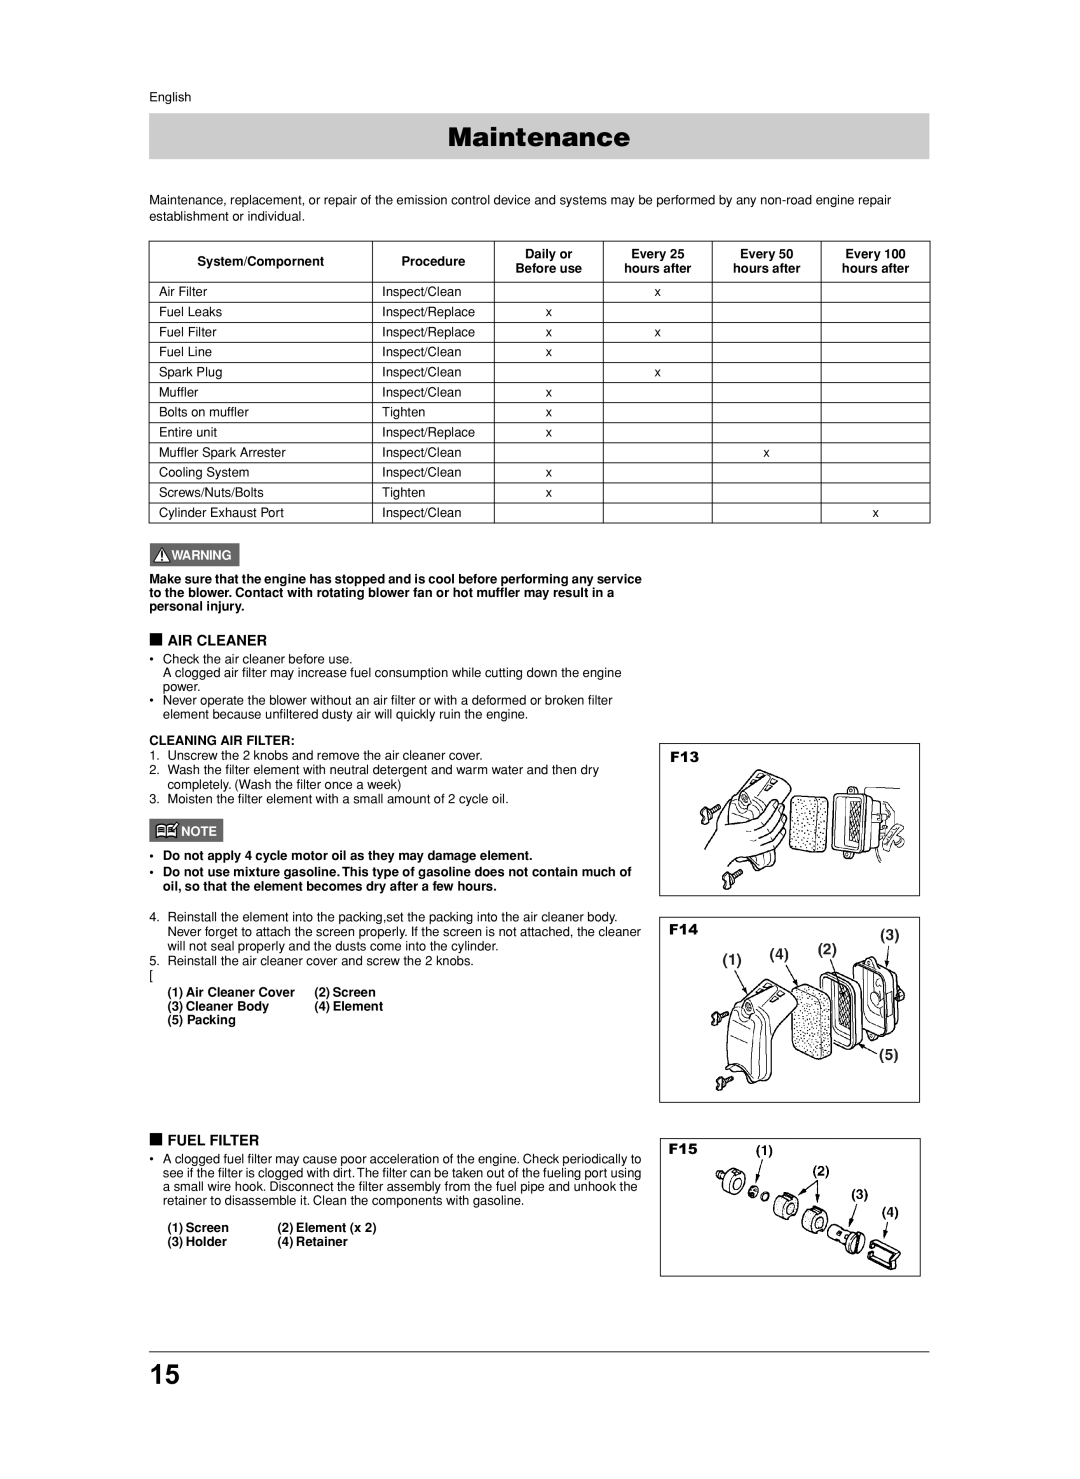 Jonsered BB2250 manual Maintenance, Air Cleaner, Fuel Filter, F13 F14 F15 